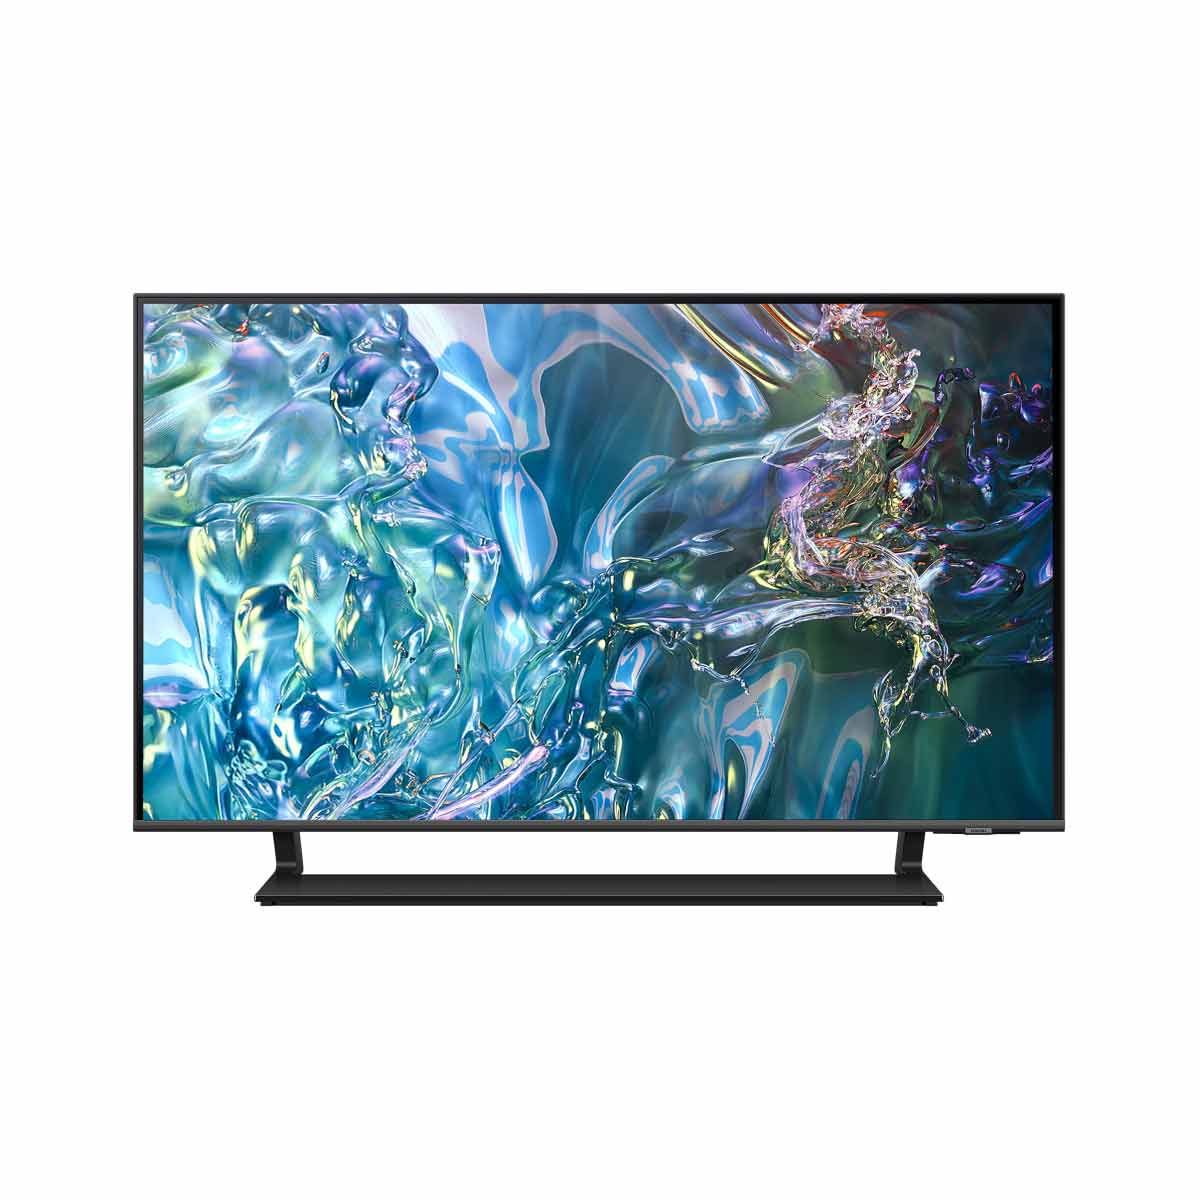 SAMSUNG QLED Smart TV 4K รุ่น QA43Q65DAKXXT Quantum Dot Smart TV ขนาด 43 นิ้ว